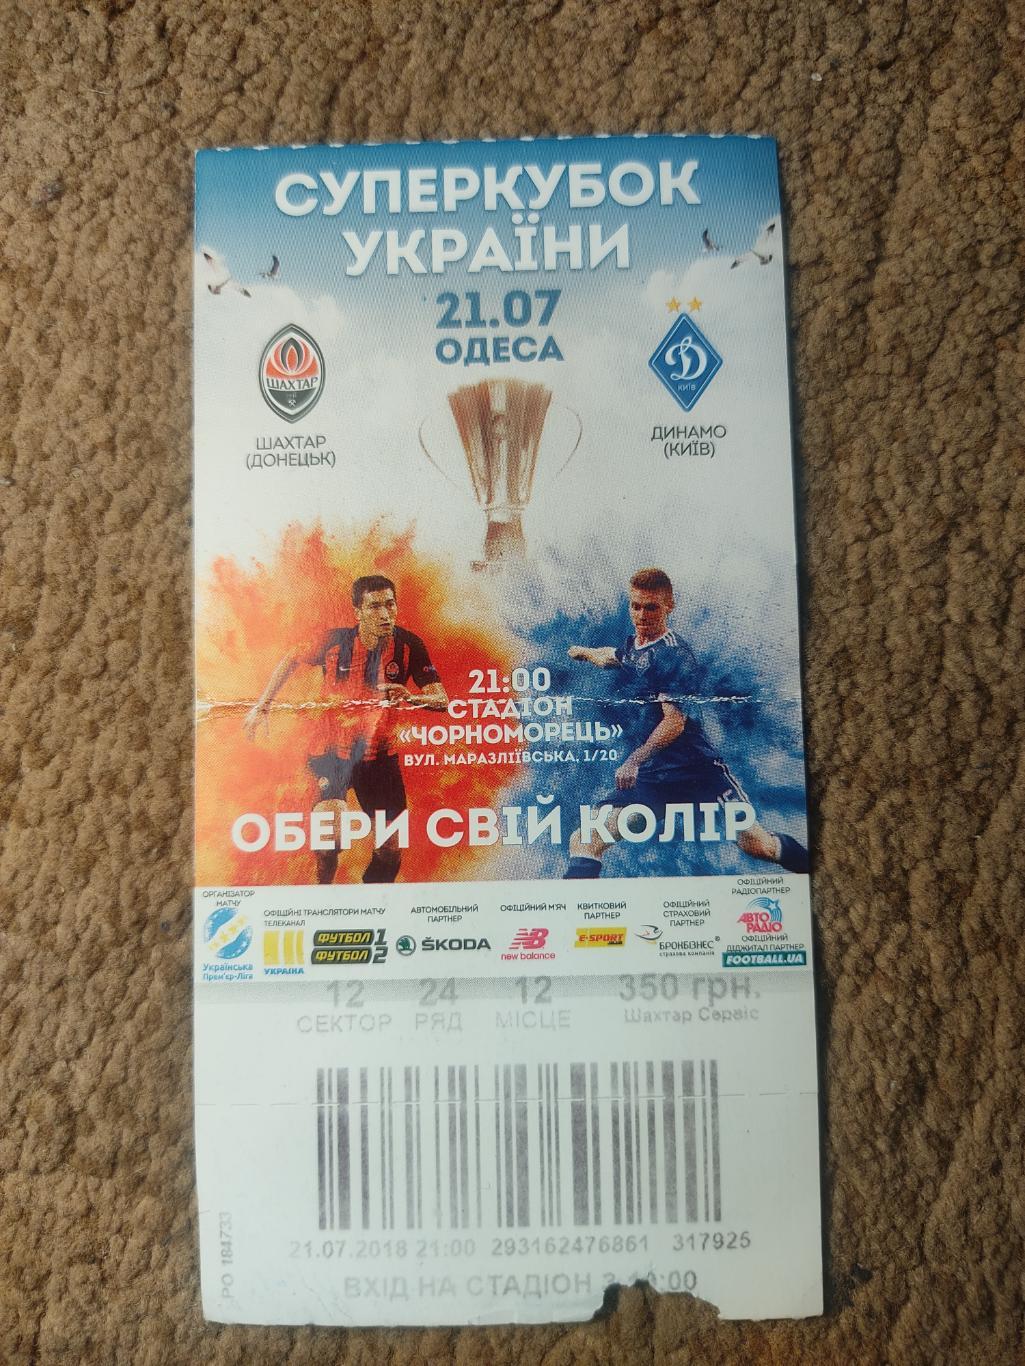 Шахтер-Динамо 21.07.18 Суперкубок Украины